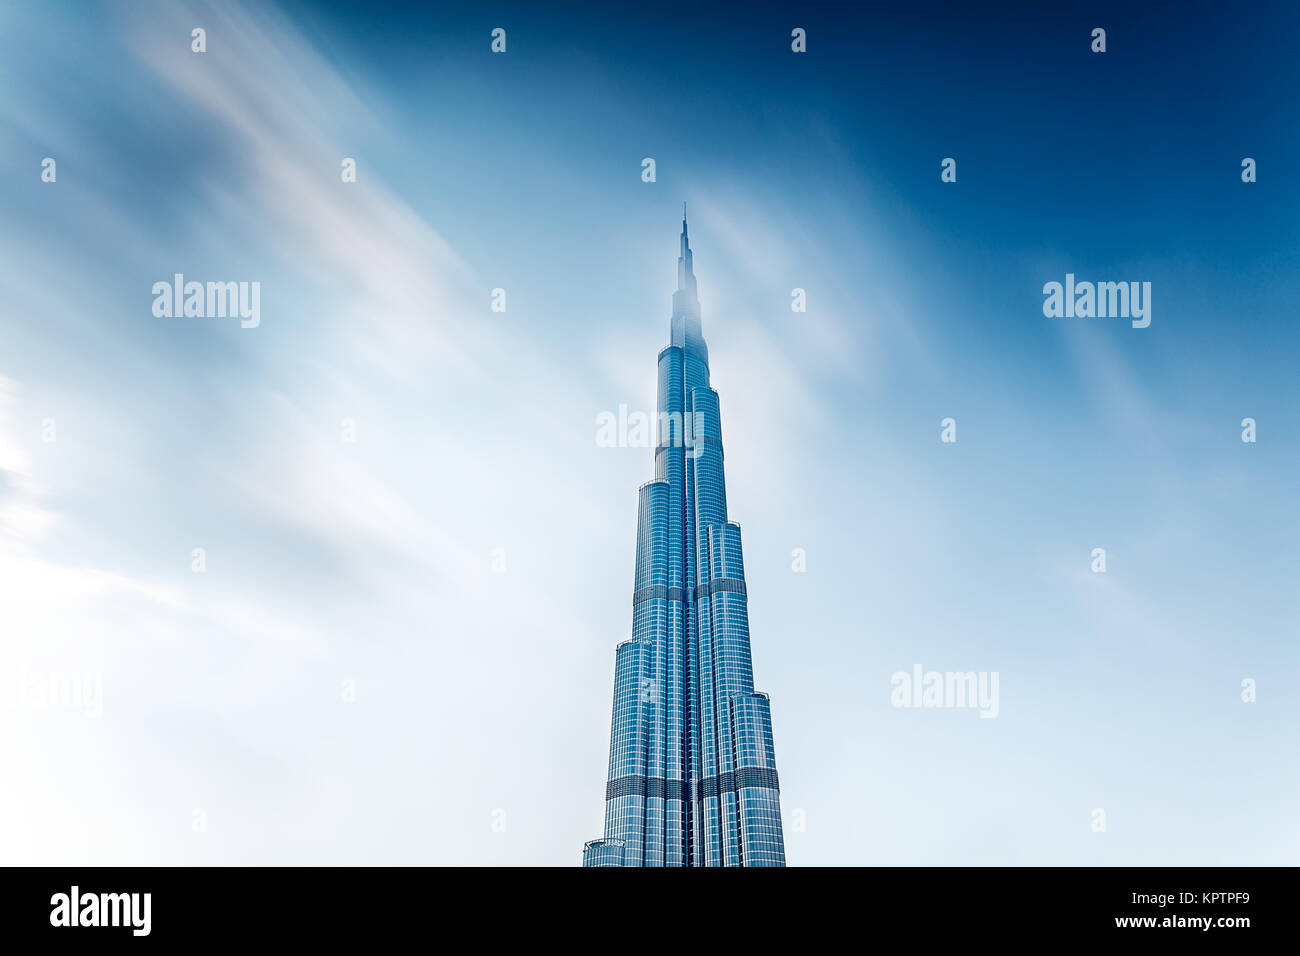 DUBAI, UAE - FEBRUARY 17: Burj Khalifa - world's tallest tower at 828m, located in Downtown Dubai, Burj Dubai on February 17, 2016 in Dubai, United Arab Emirates Stock Photo